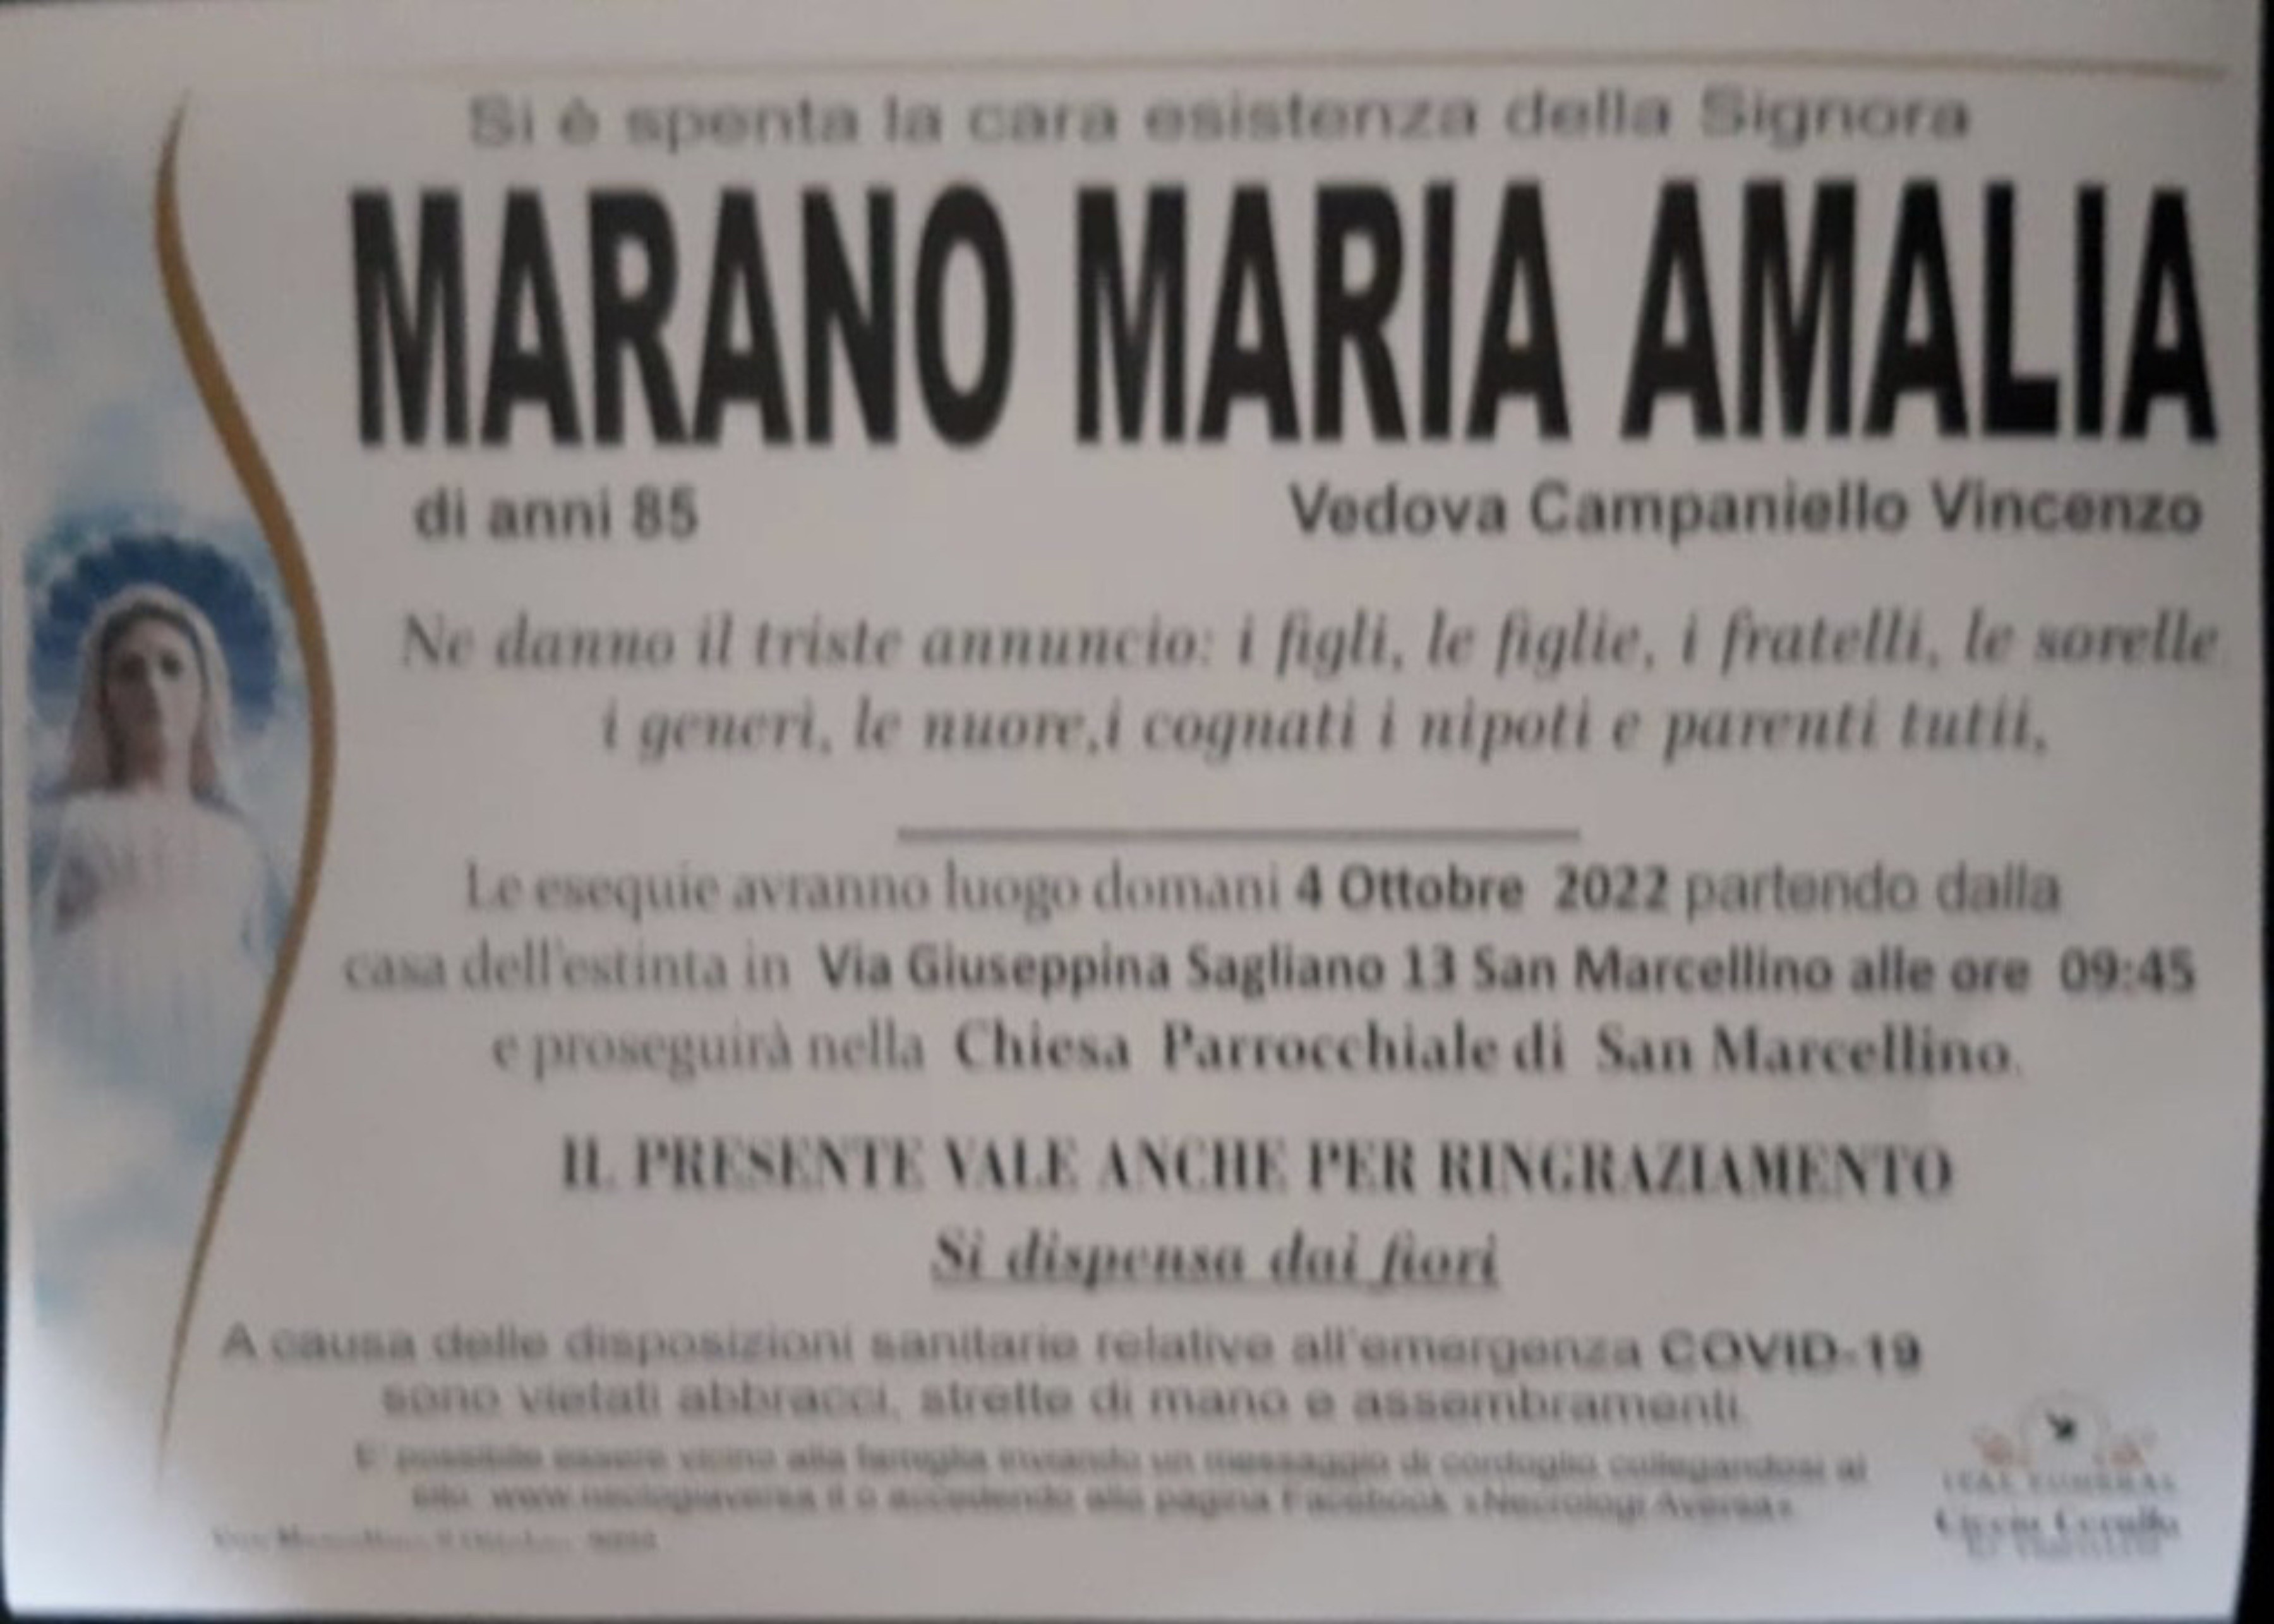 Maria Amalia Marano